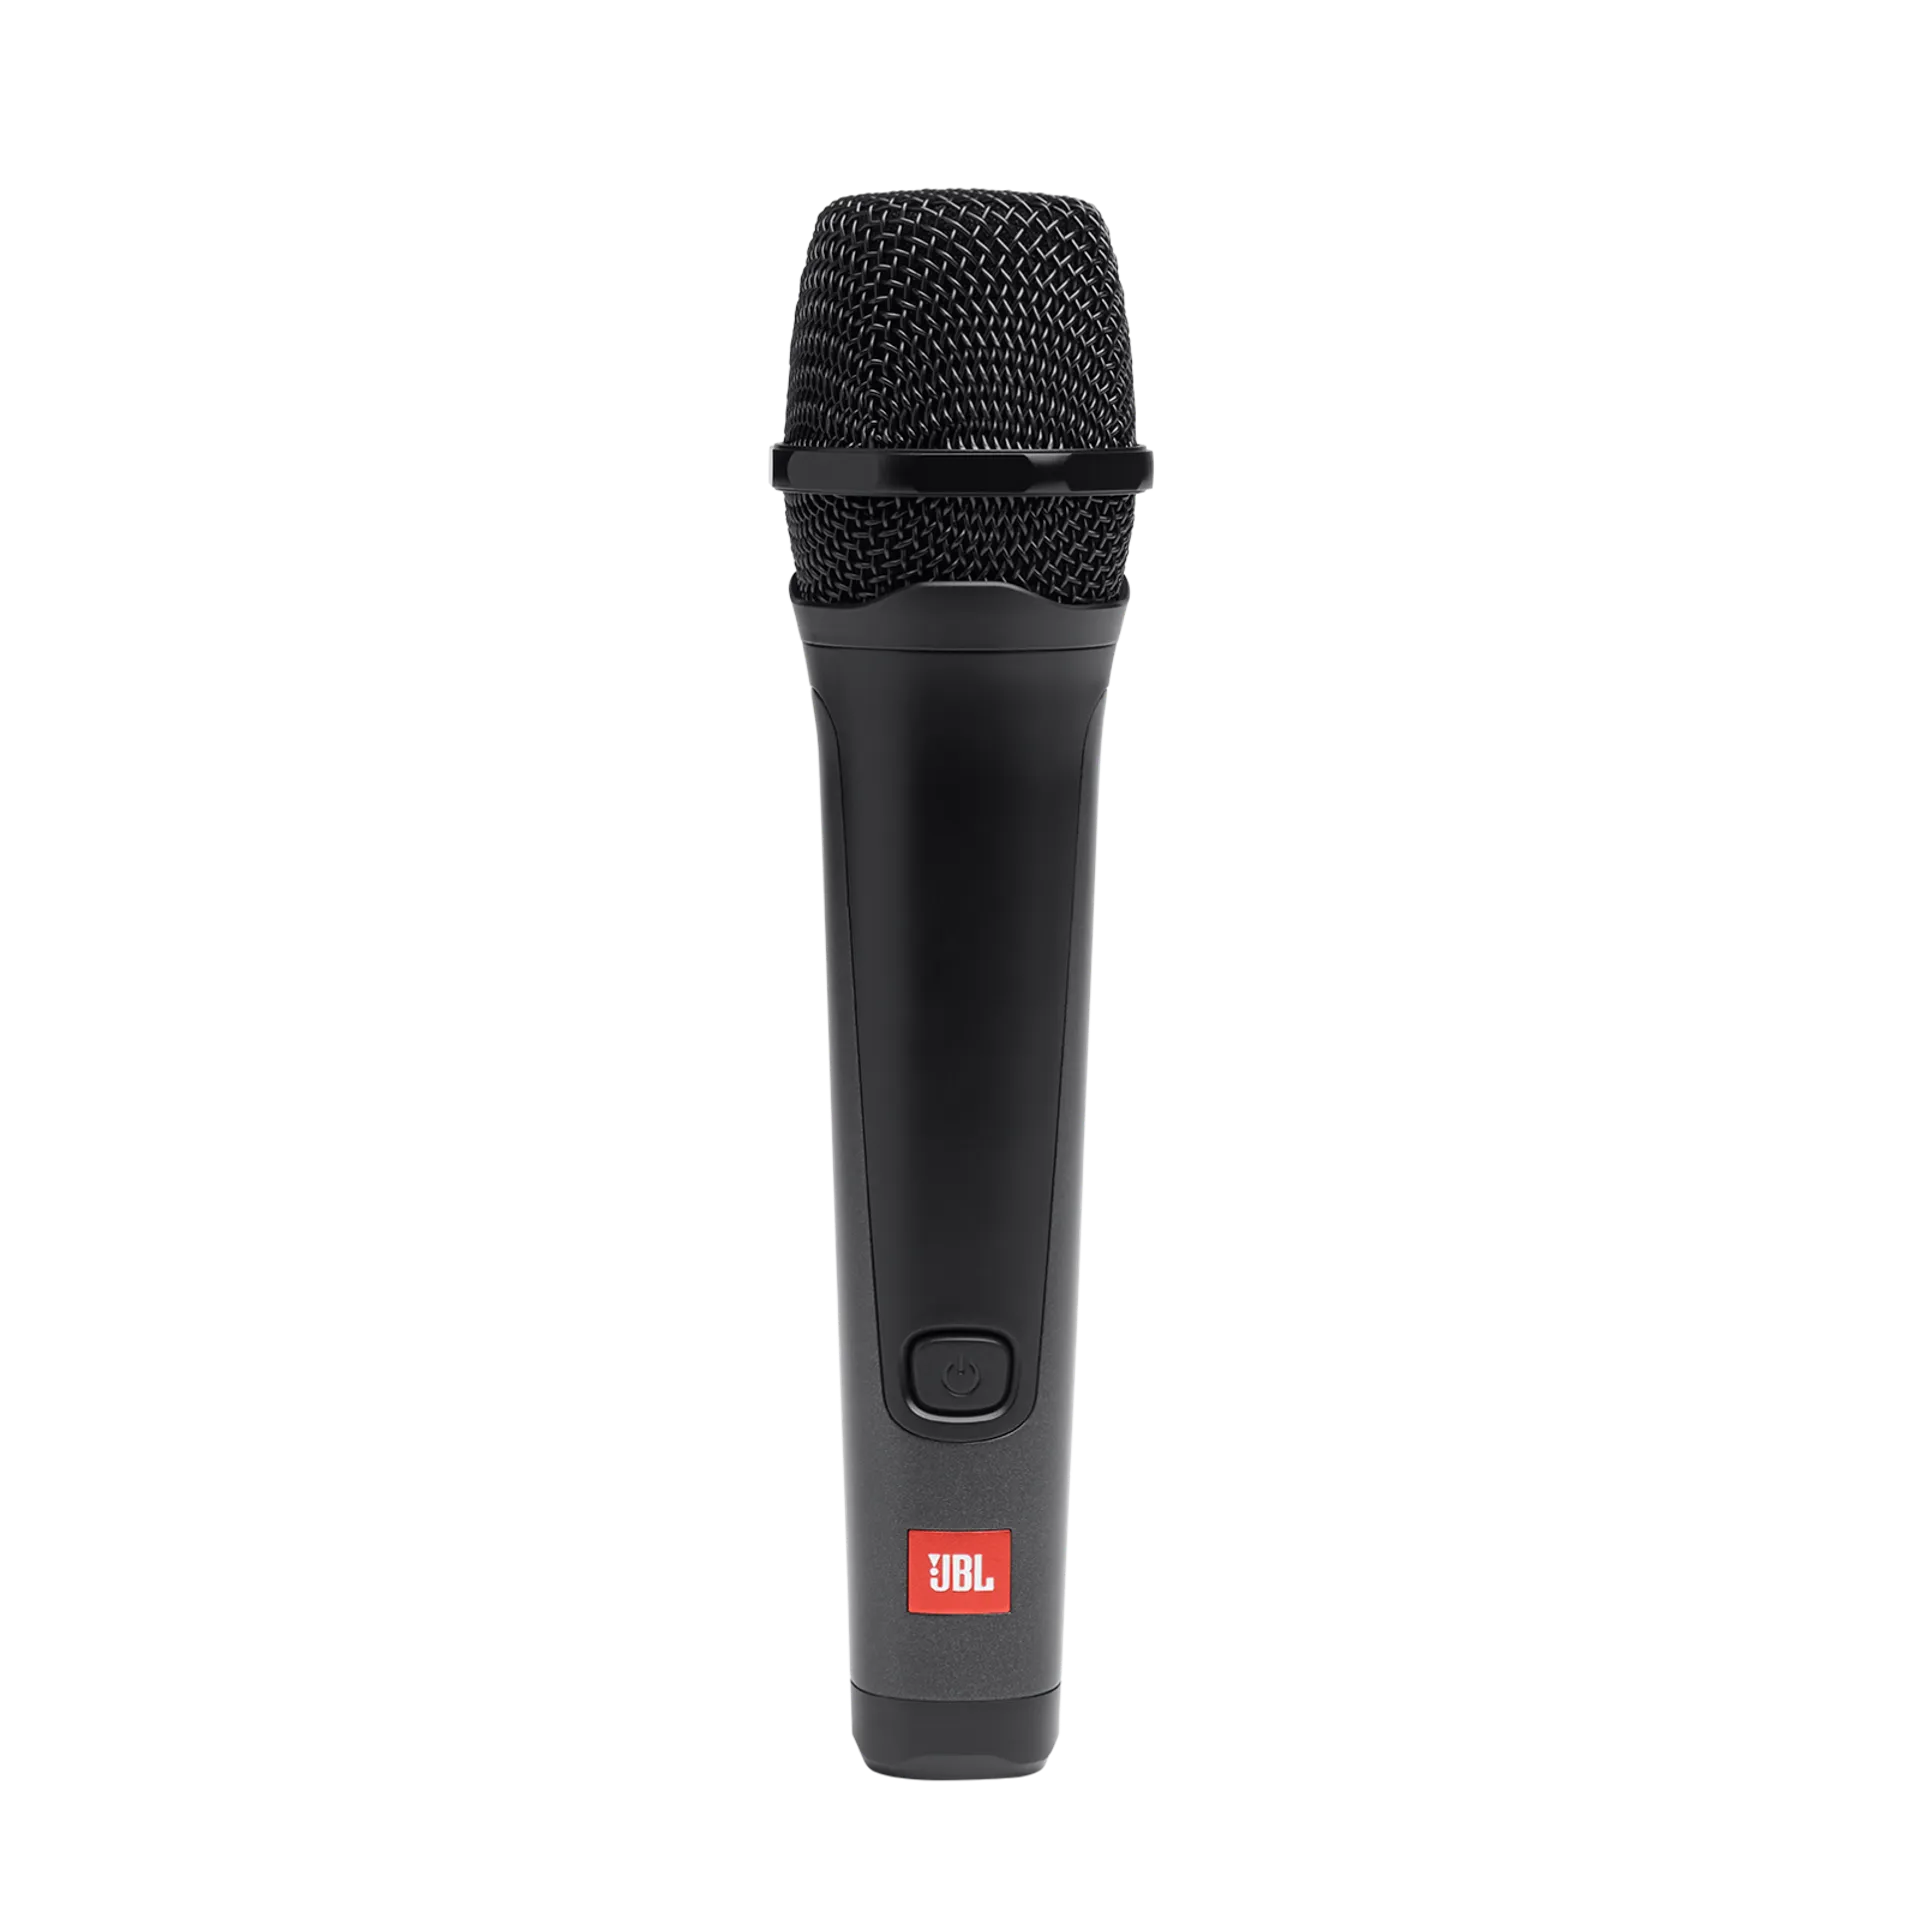 JBL langaton mikrofoni - 2